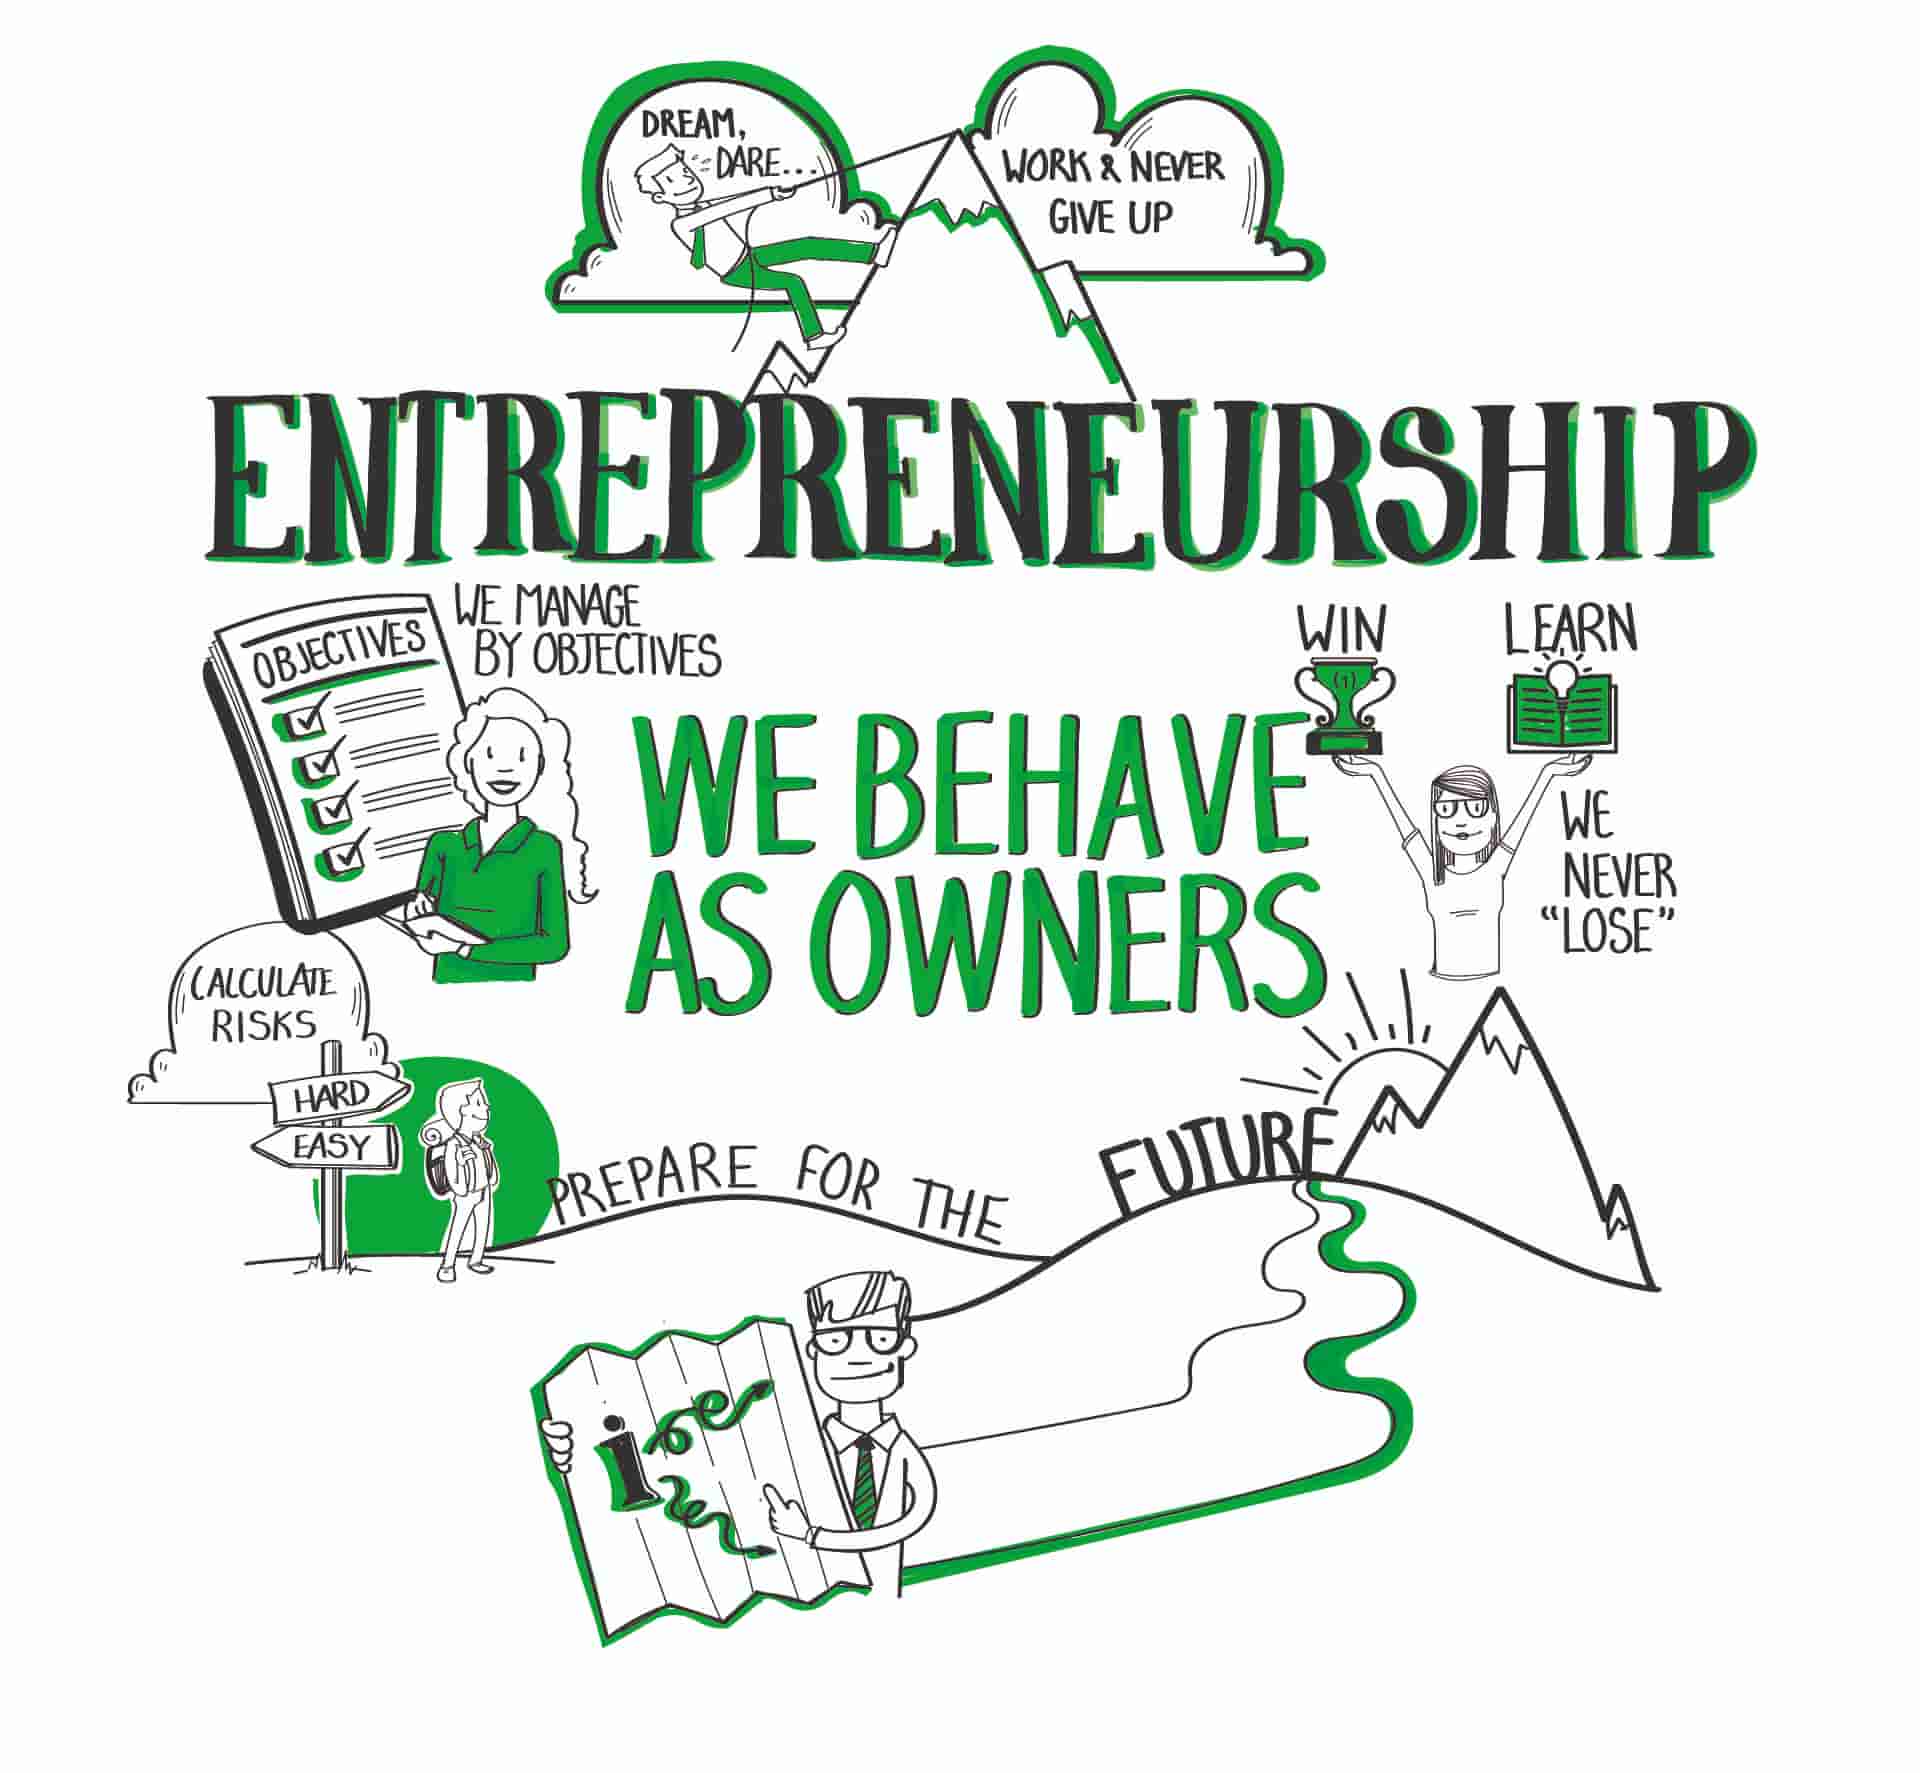 Luminus Corporate - Onze waarden: Entrepreneurship.